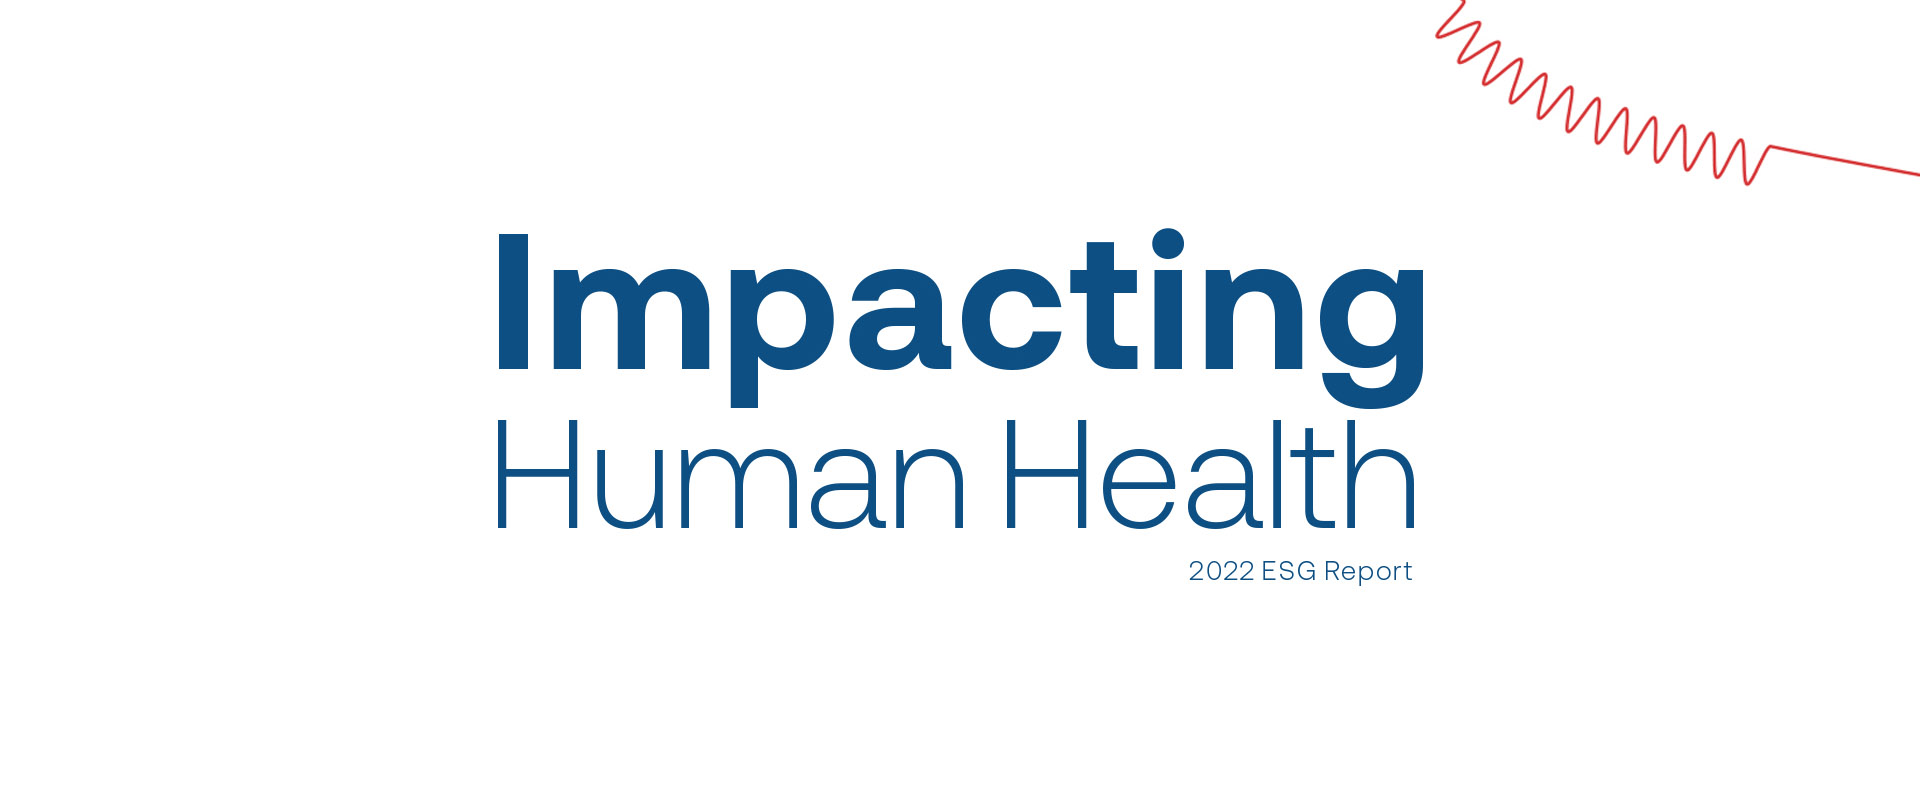 "impacting human health, 2022 ESG Report"